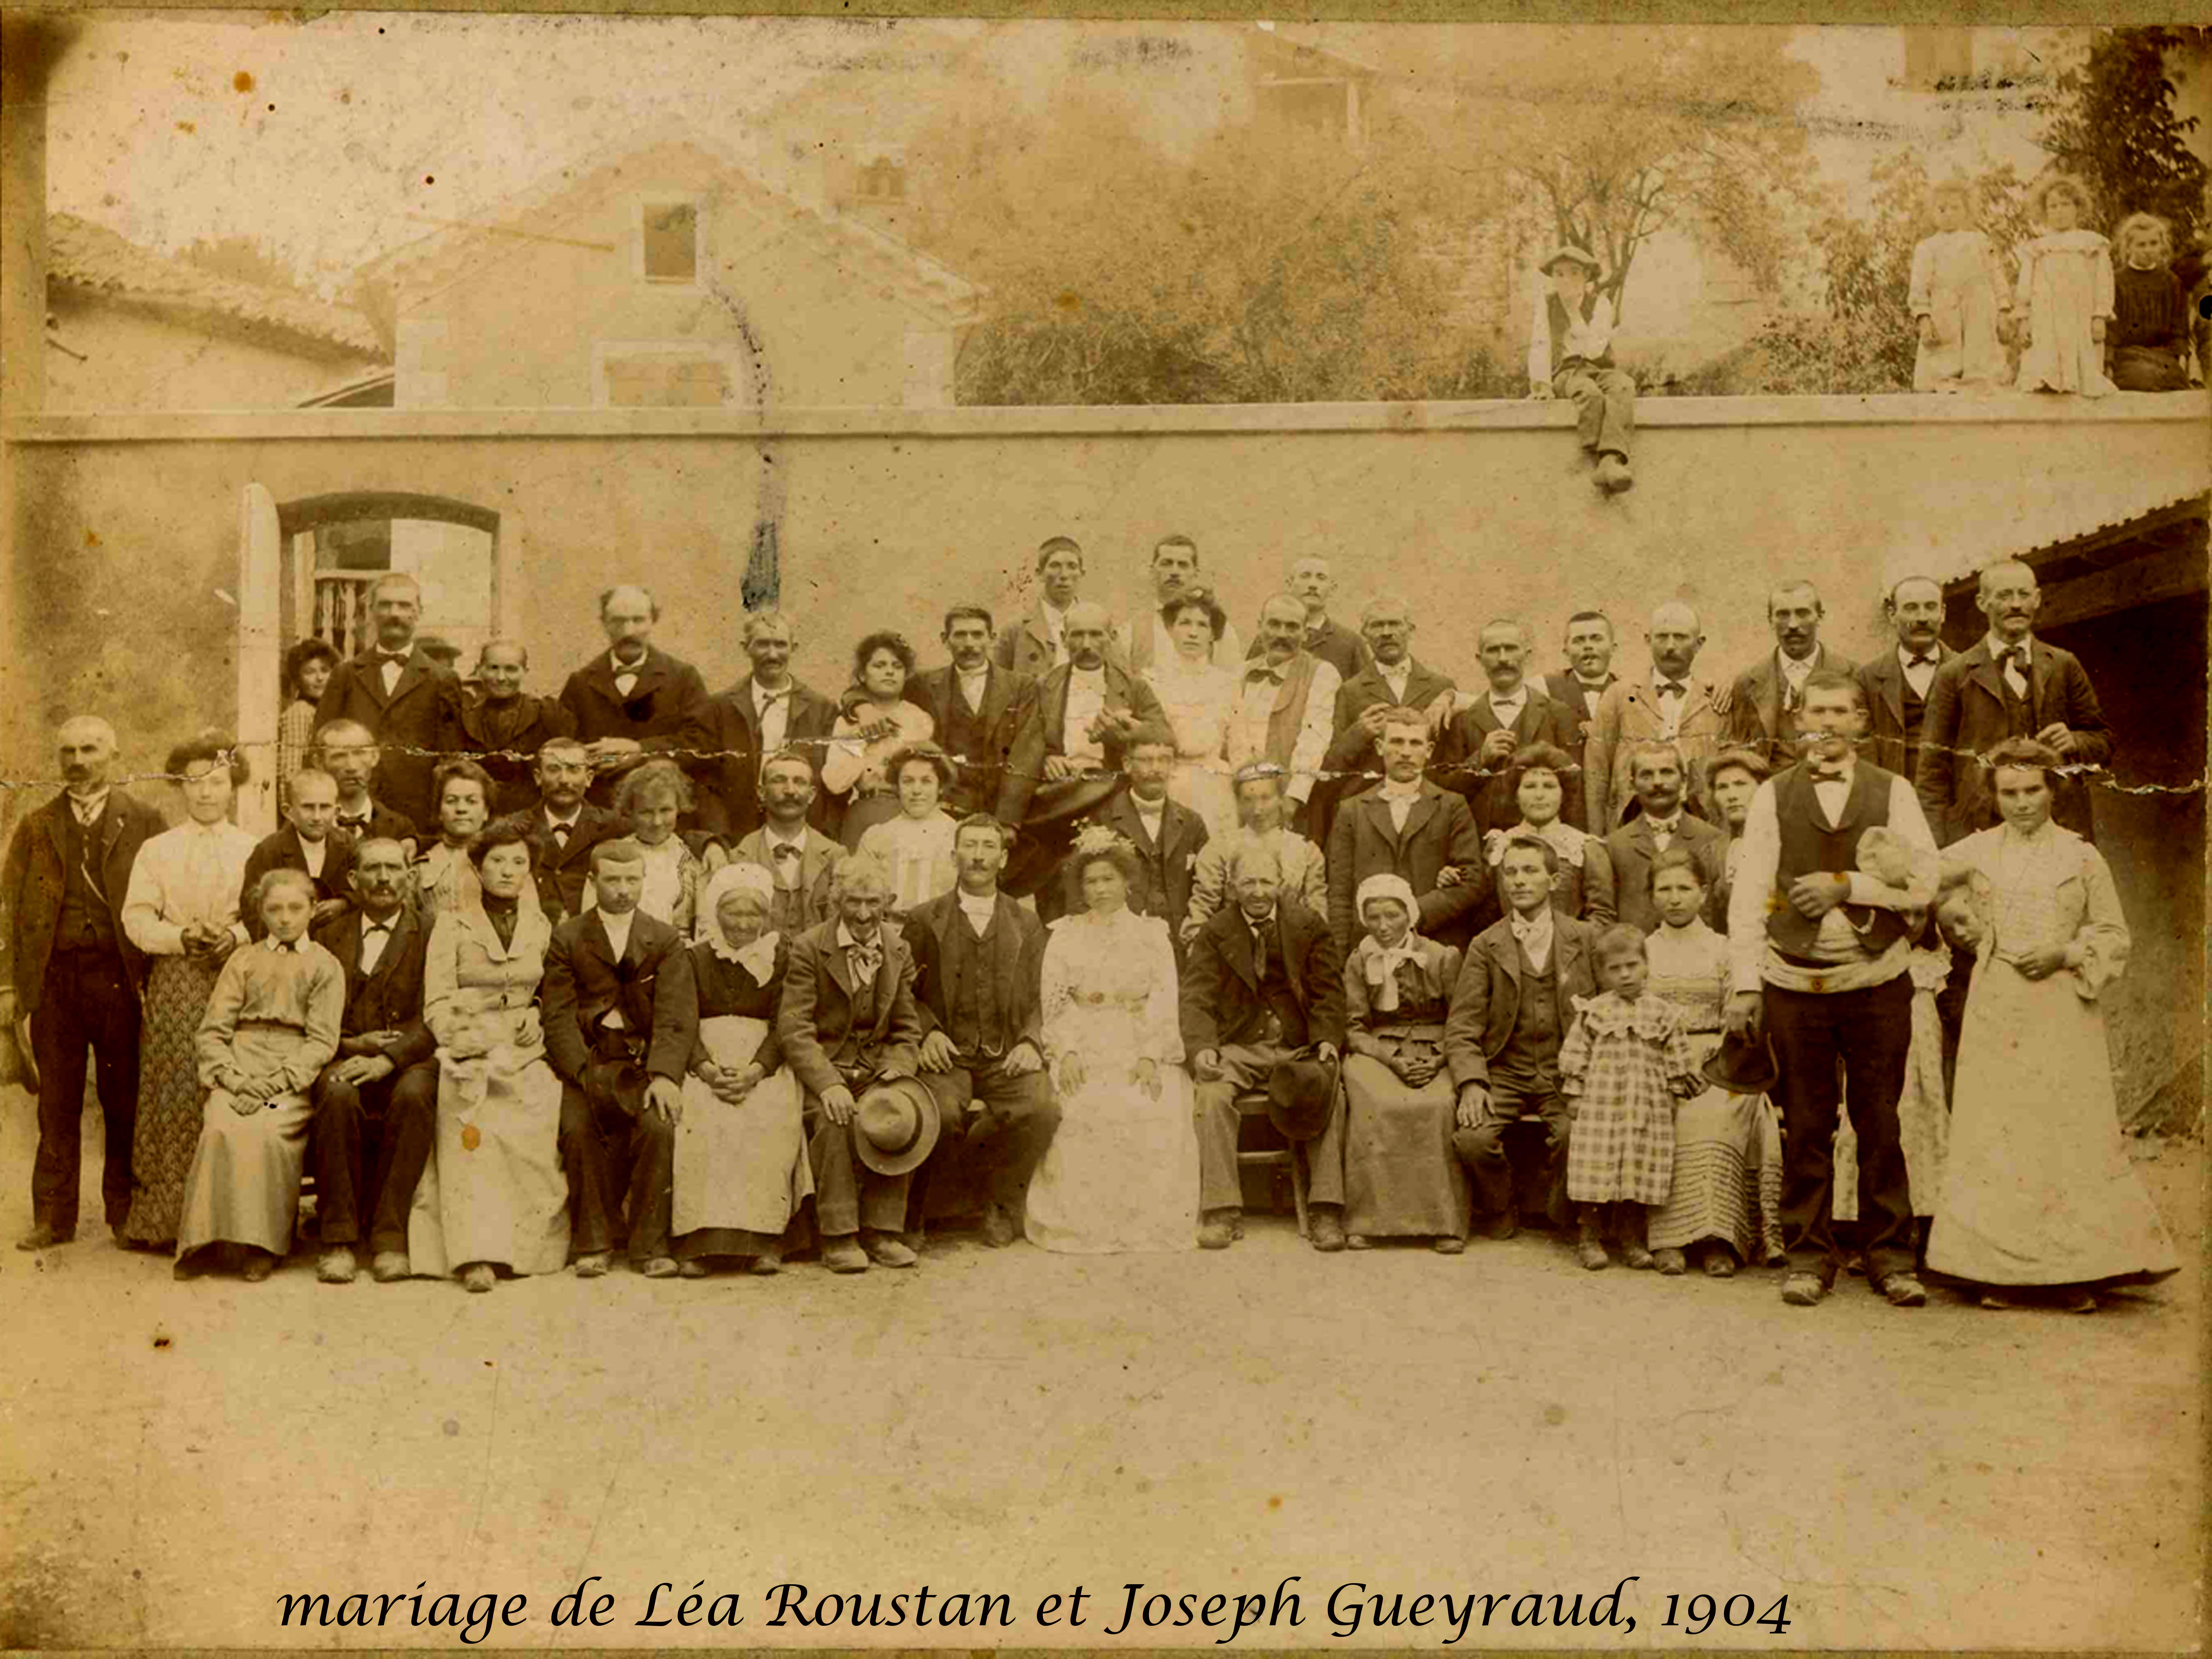 mariage_Joseph_Gueyraud_et_Lea_Roustan_1904_groupe_copie.jpg